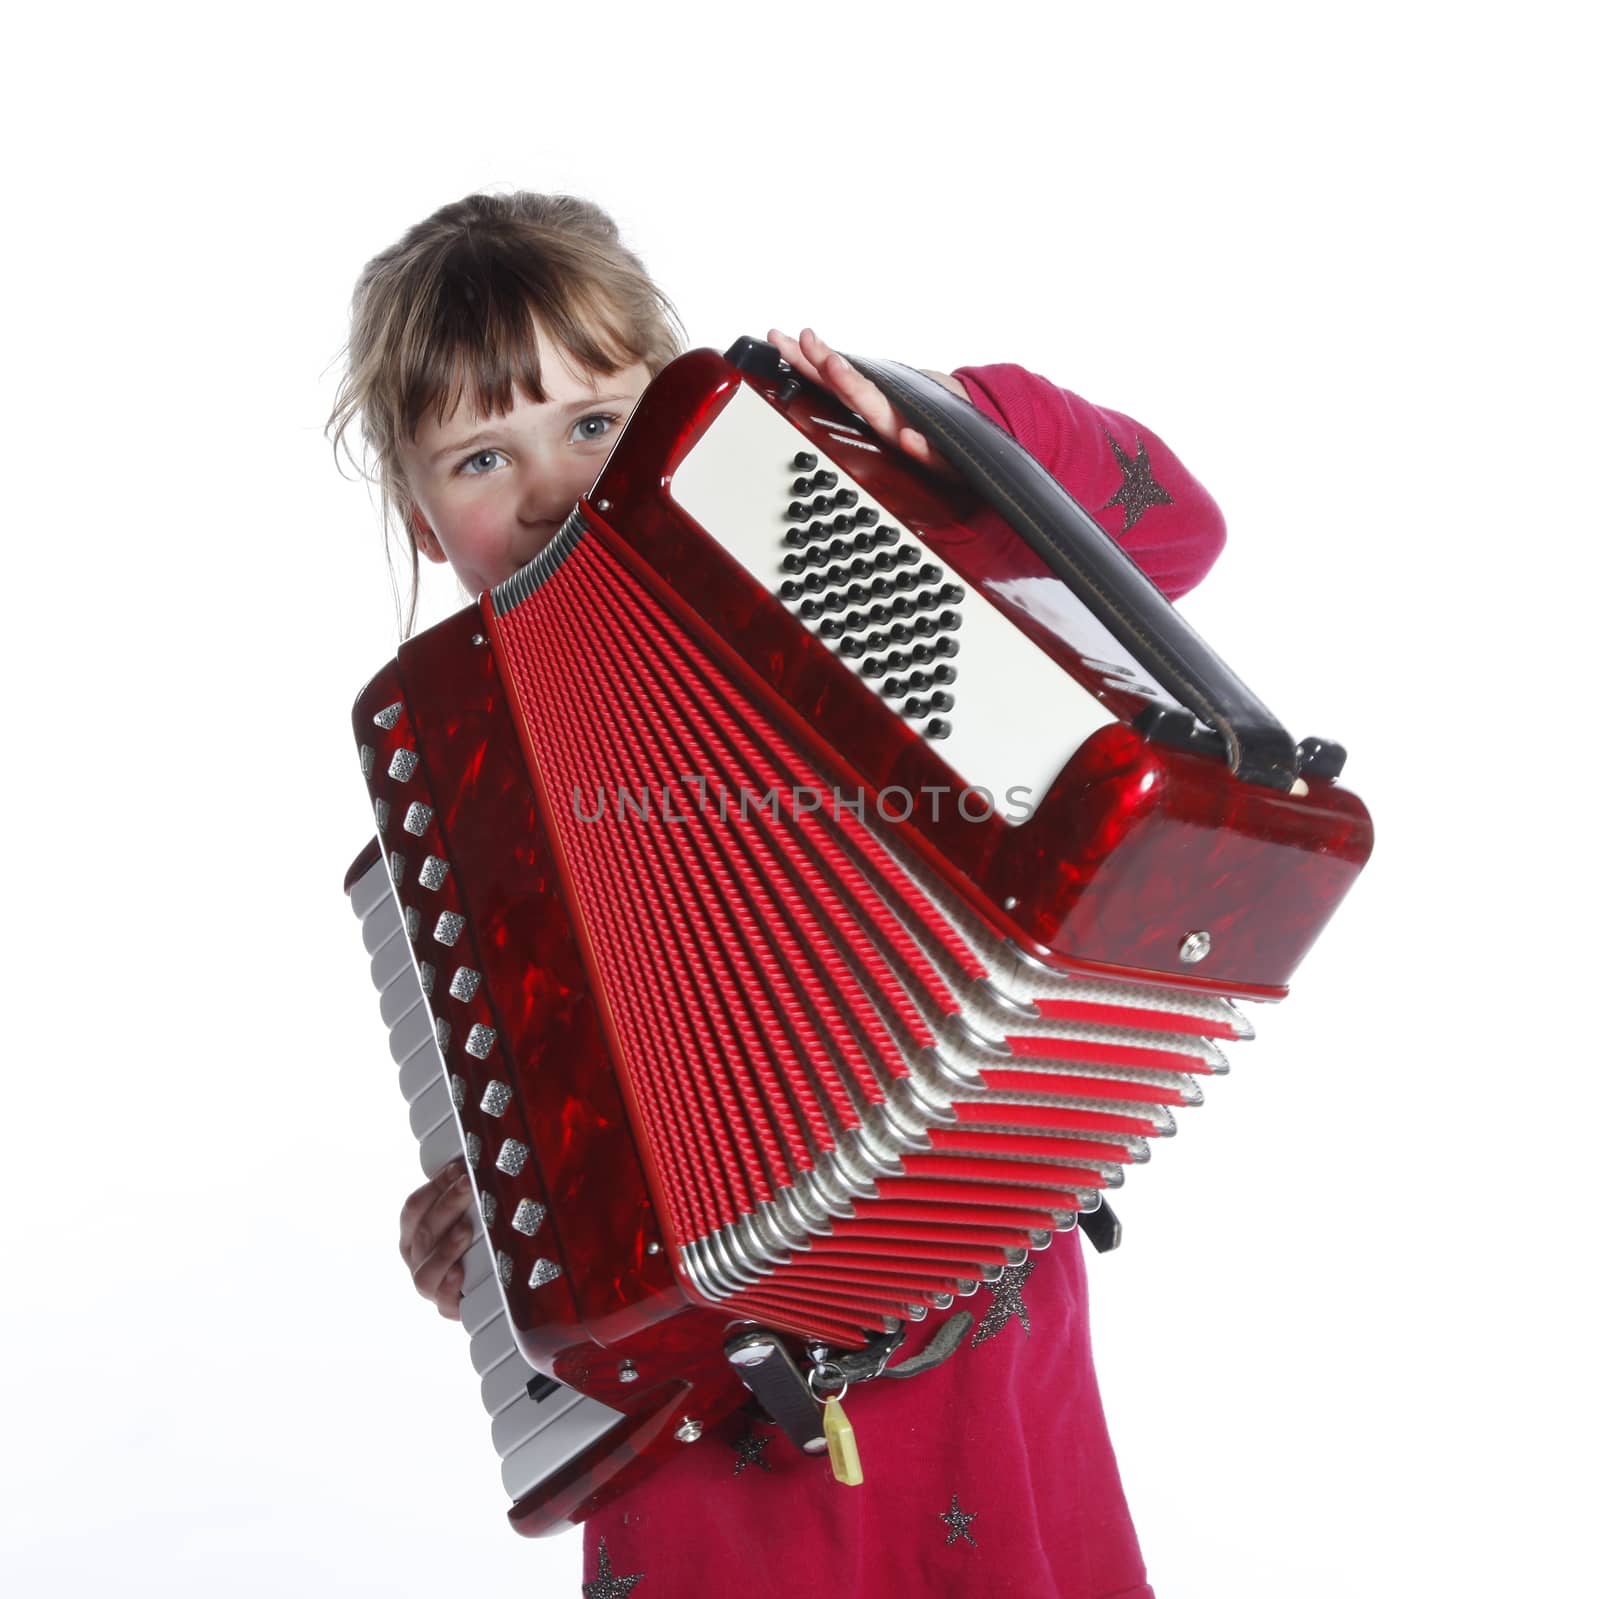 very young girl with accordion in studio by ahavelaar